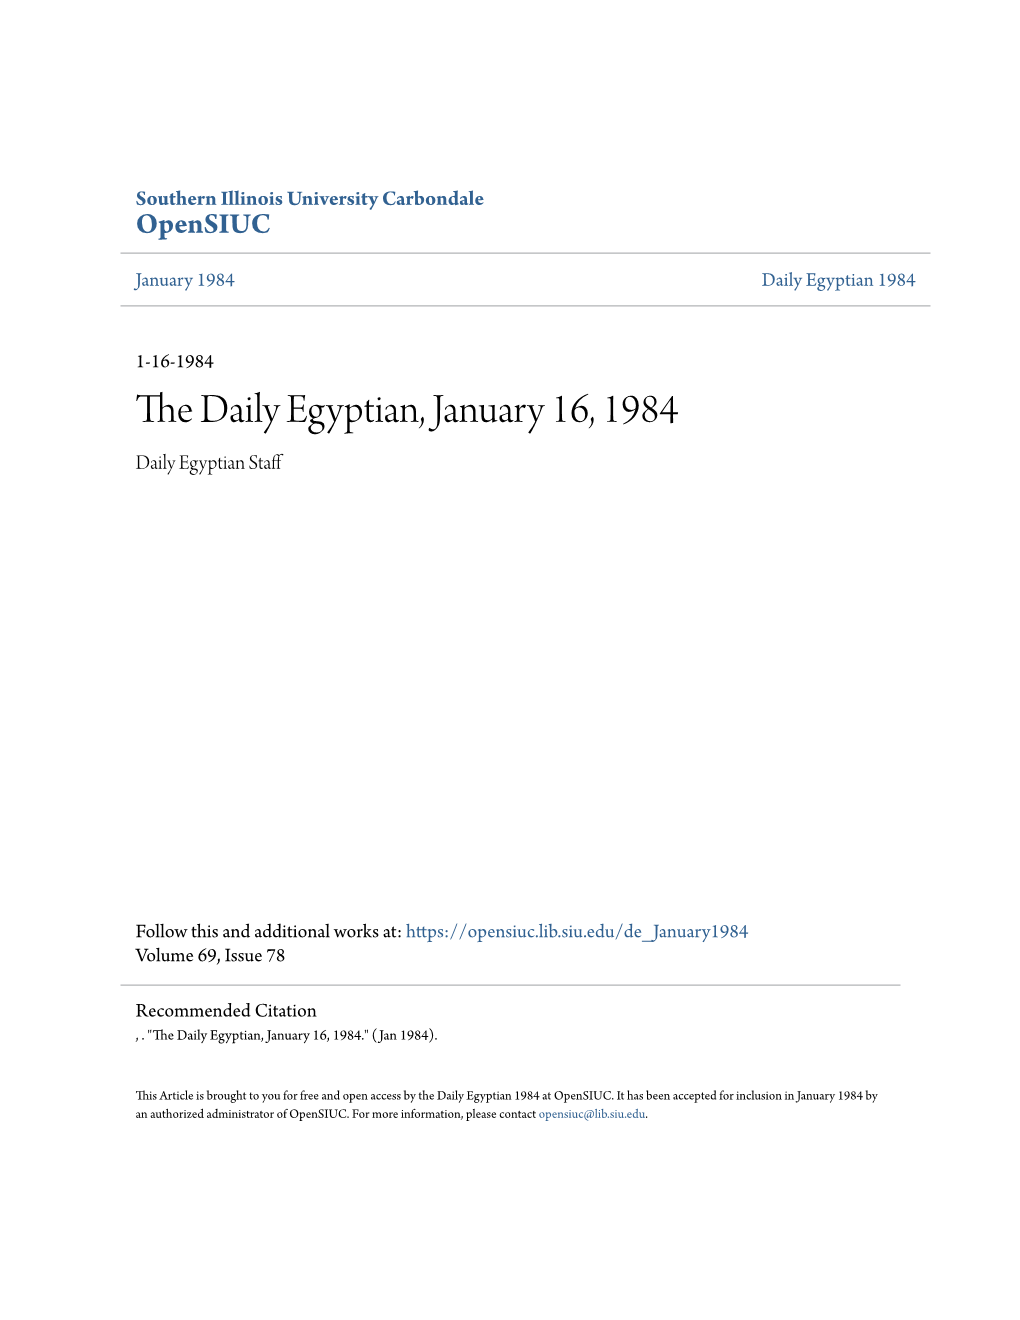 The Daily Egyptian, January 16, 1984